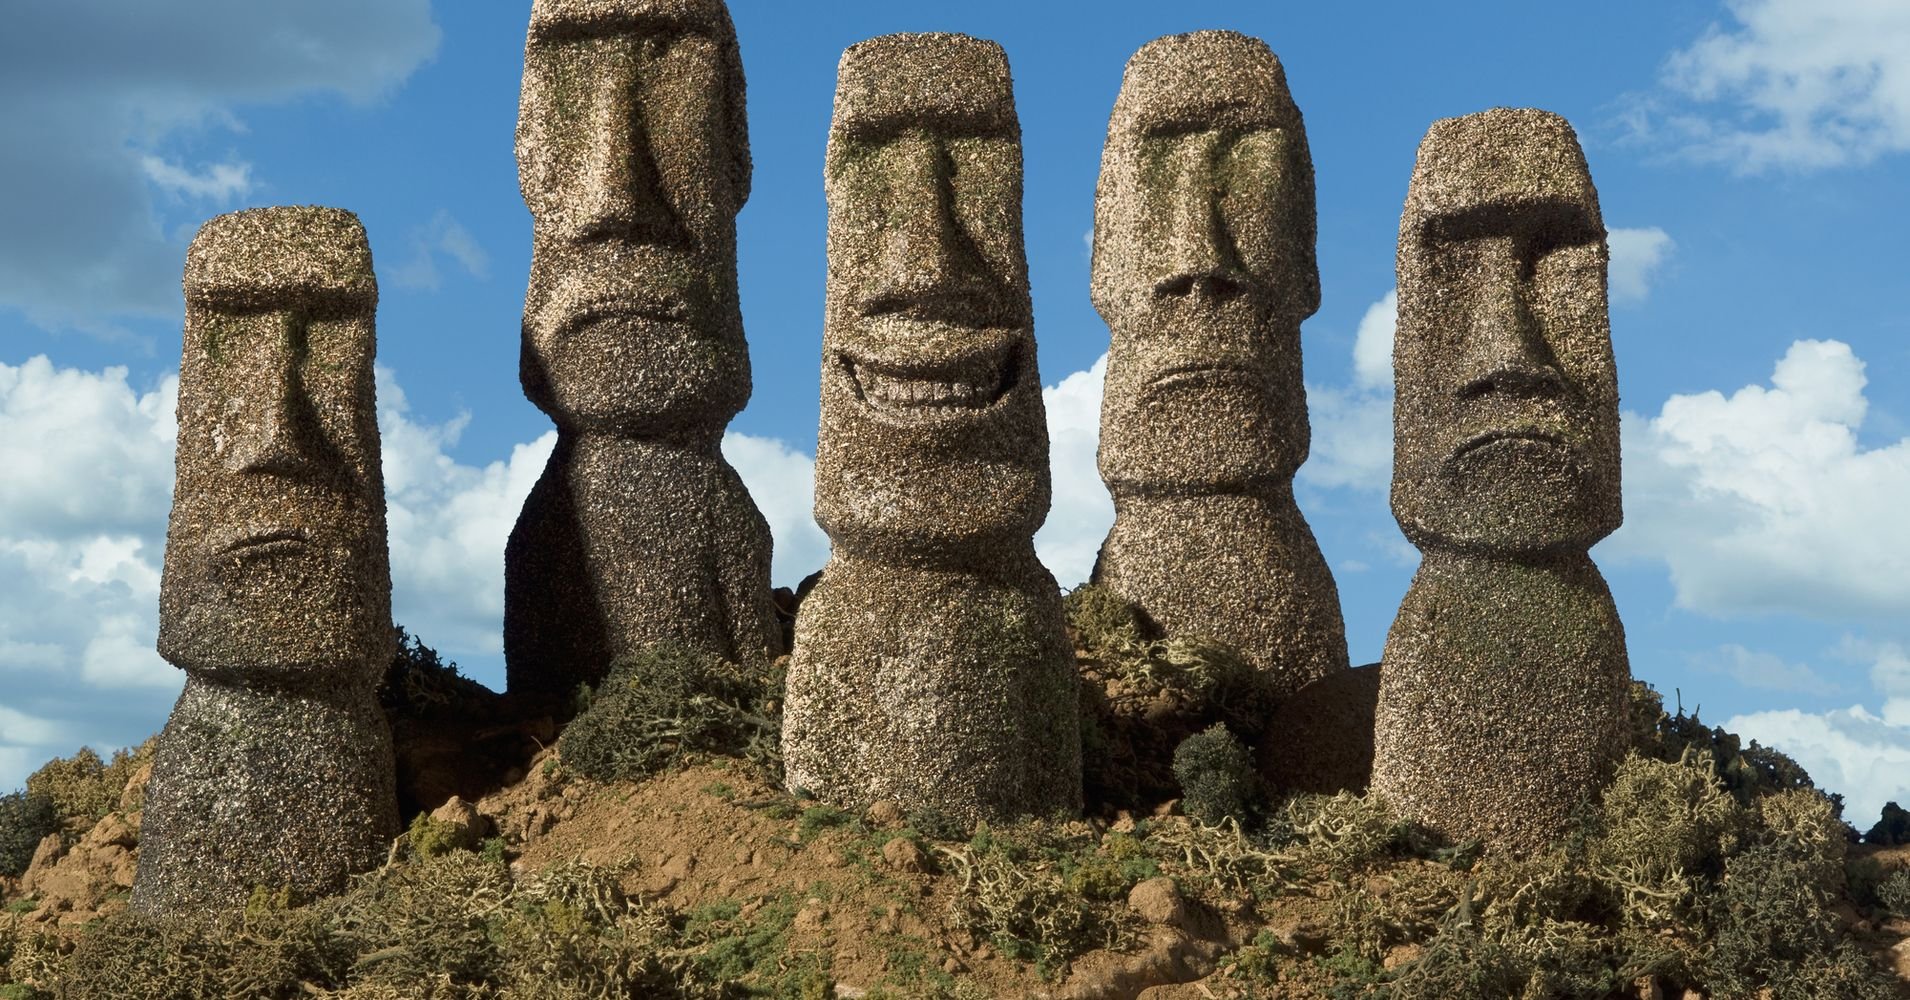 A world of something. Остров Пасхи статуи Моаи. Каменные истуканы острова Пасхи. Каменные статуи Моаи остров Пасхи Чили. Каменные головы на острове Пасхи.